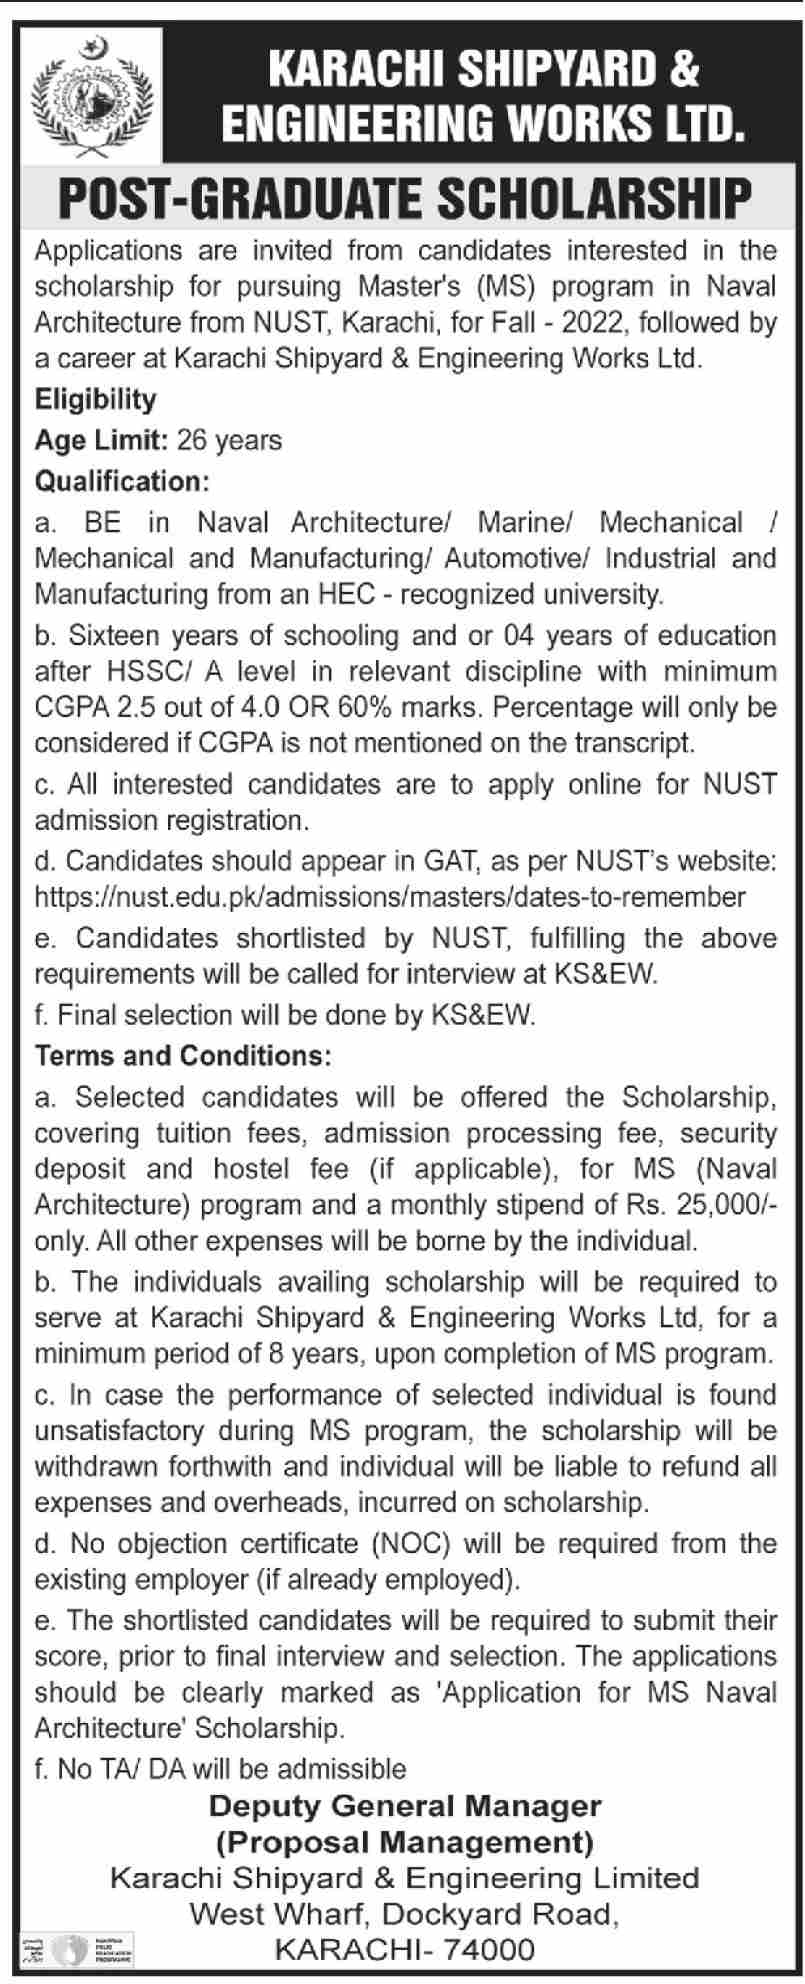 Karachi Shipyard Scholarship 2022 Post-Graduate